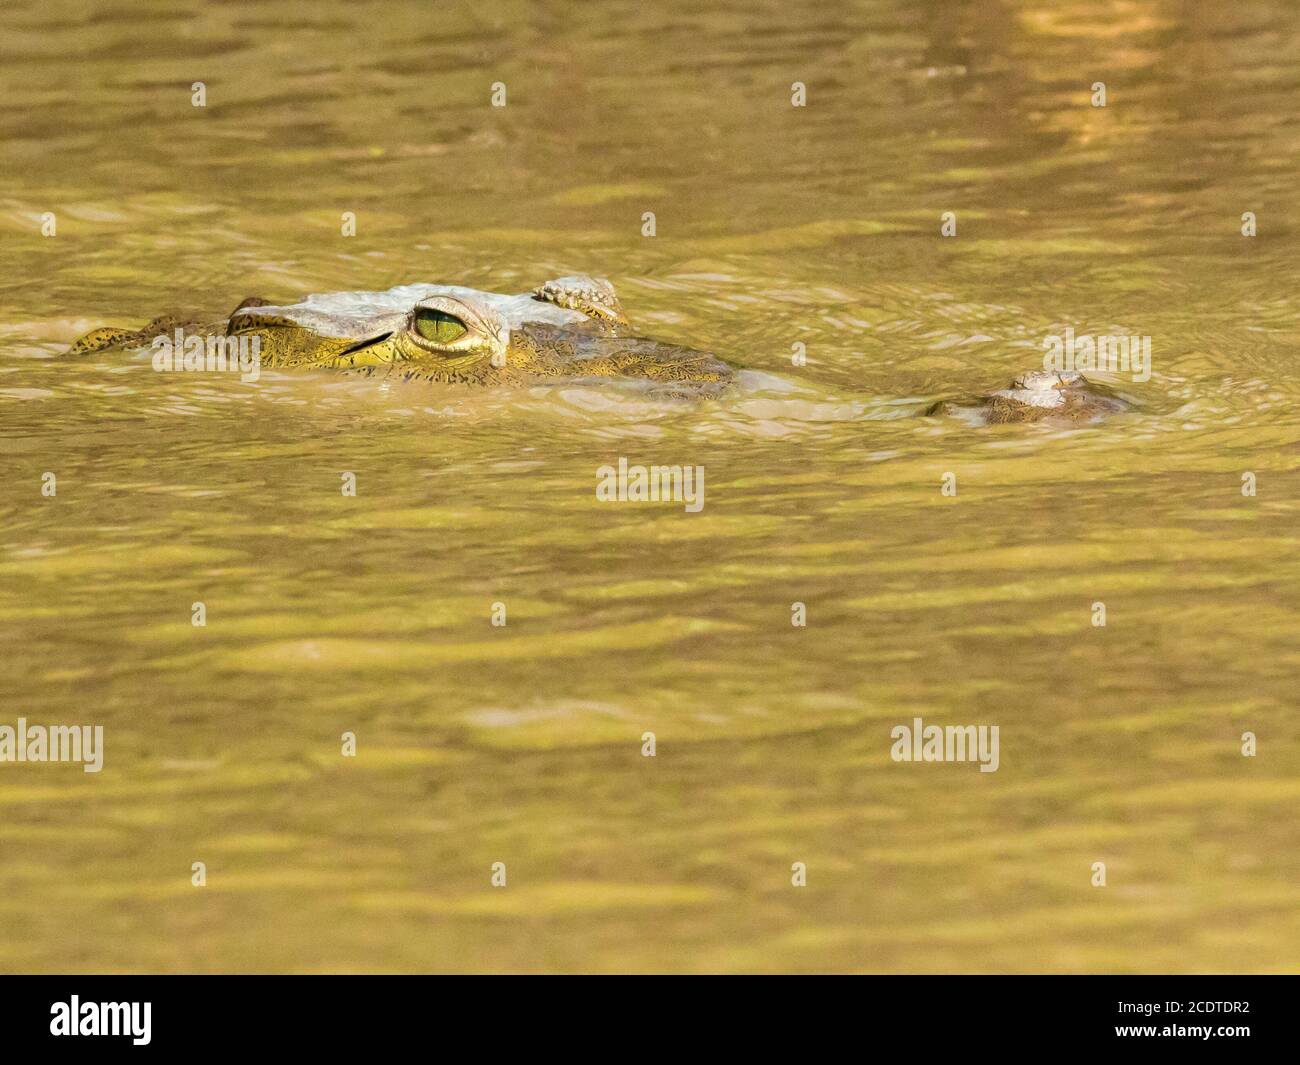 eye of crocodile of Costa Rica in the water Stock Photo